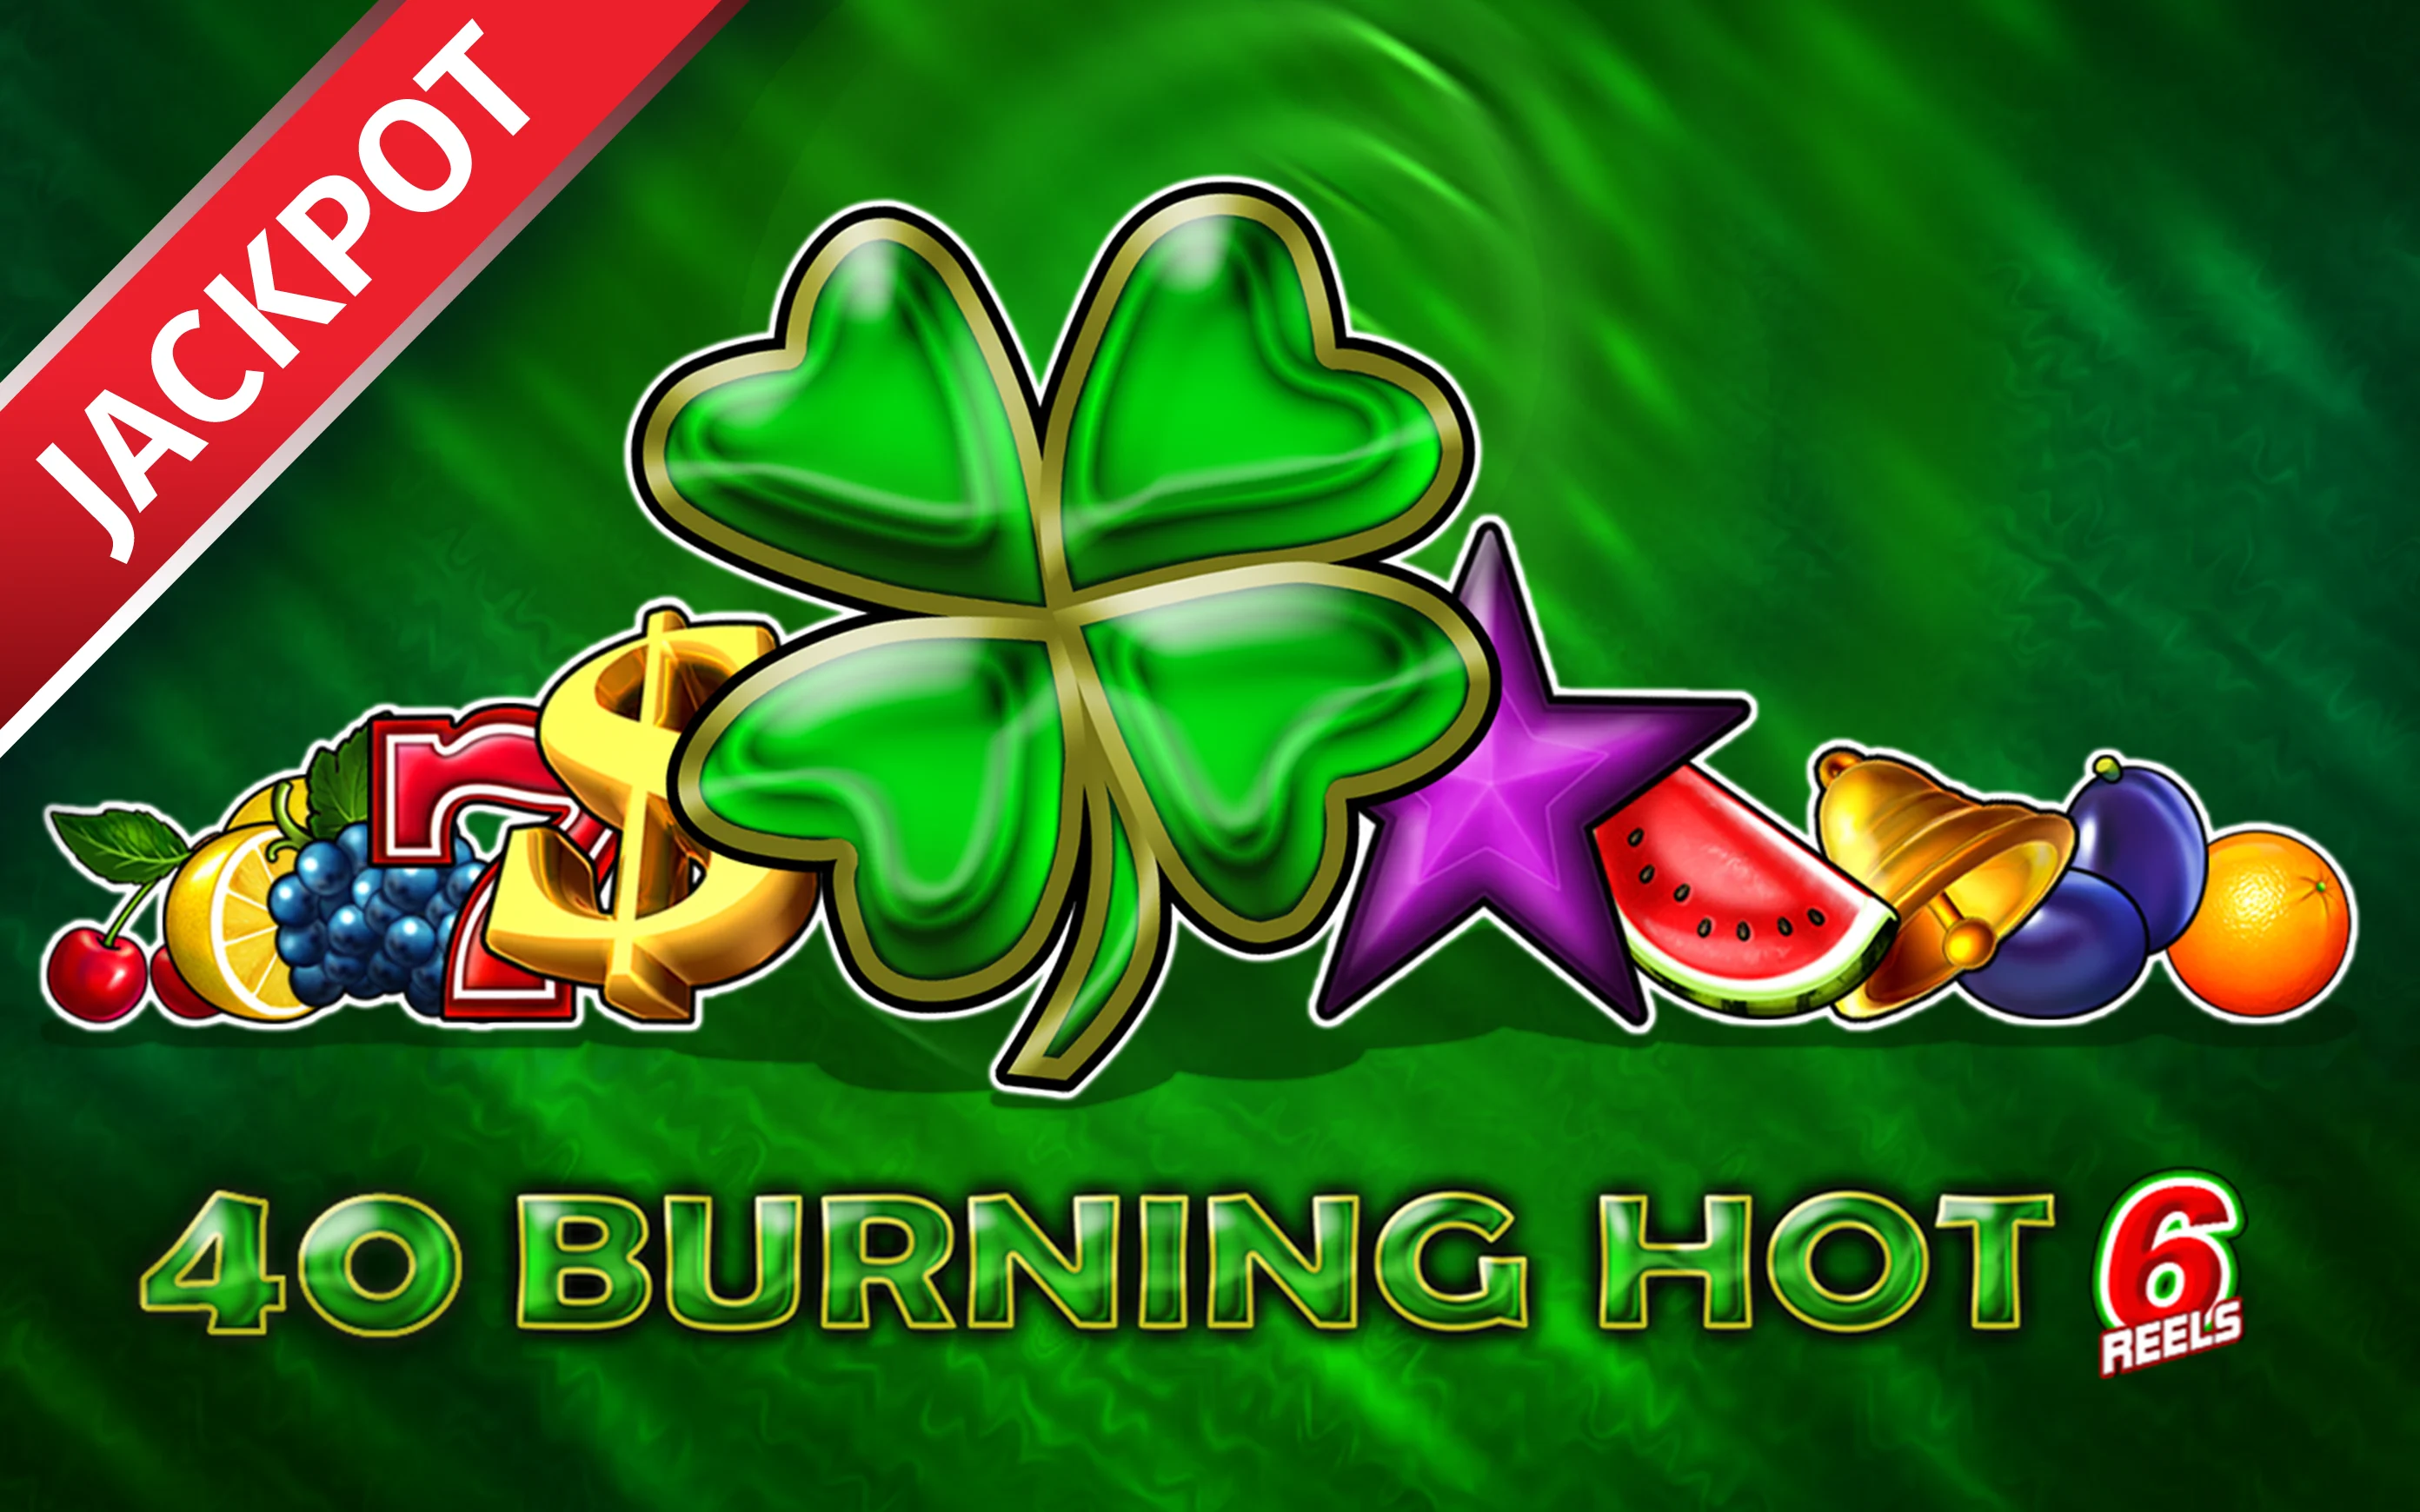 Jogue 40 Burning Hot 6 Reels no casino online Starcasino.be 